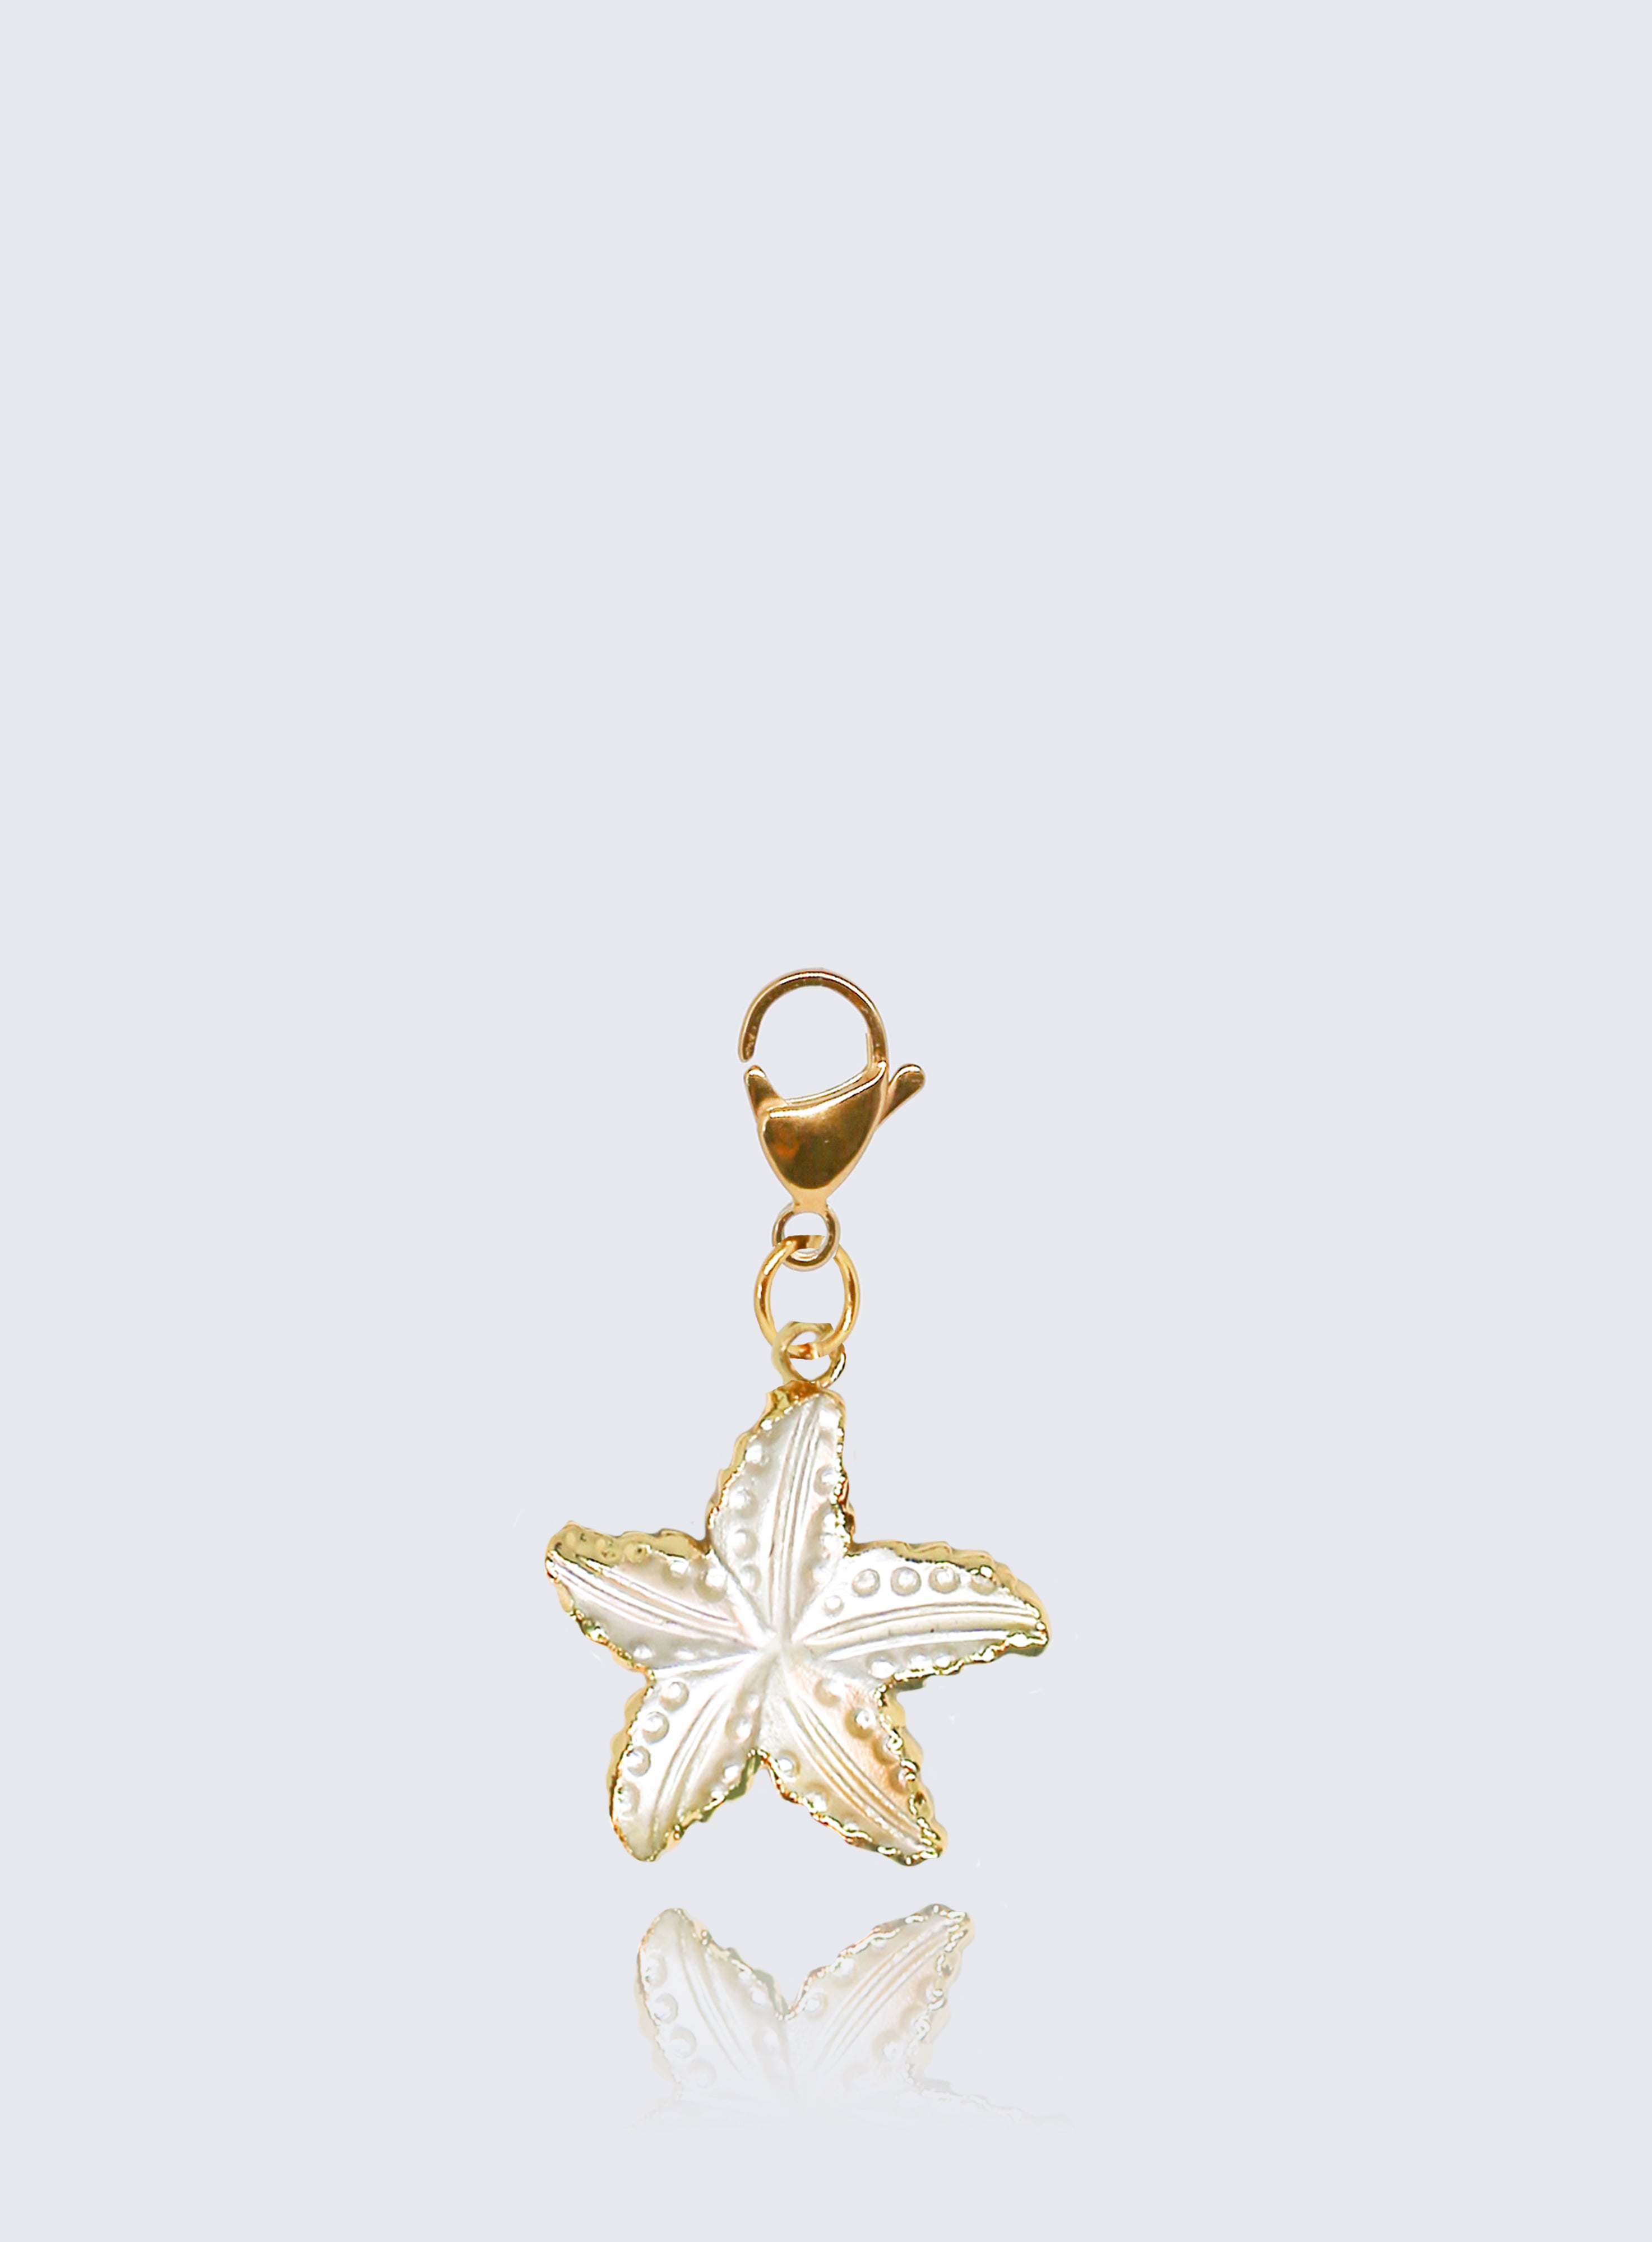 Sea star pendant